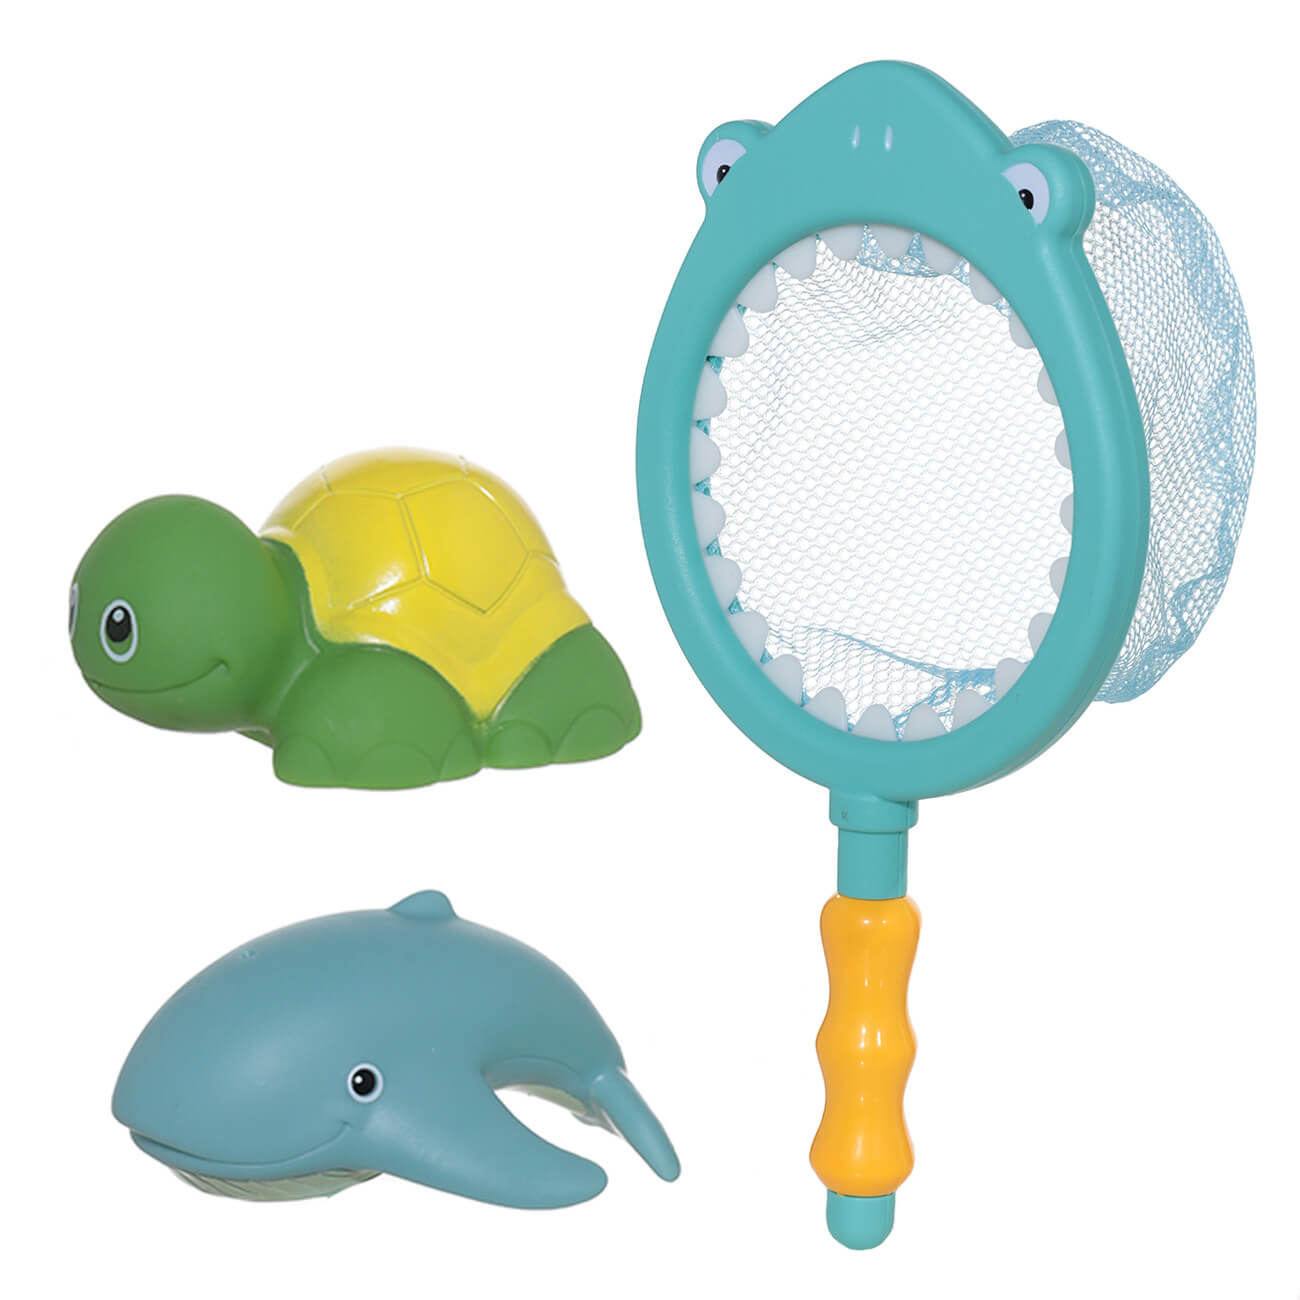 Набор игрушек для купания, 3 пр, сачок/игрушки, резина/пластик, Акула, Aquatic animals мои игрушки pop up дорожки стихи